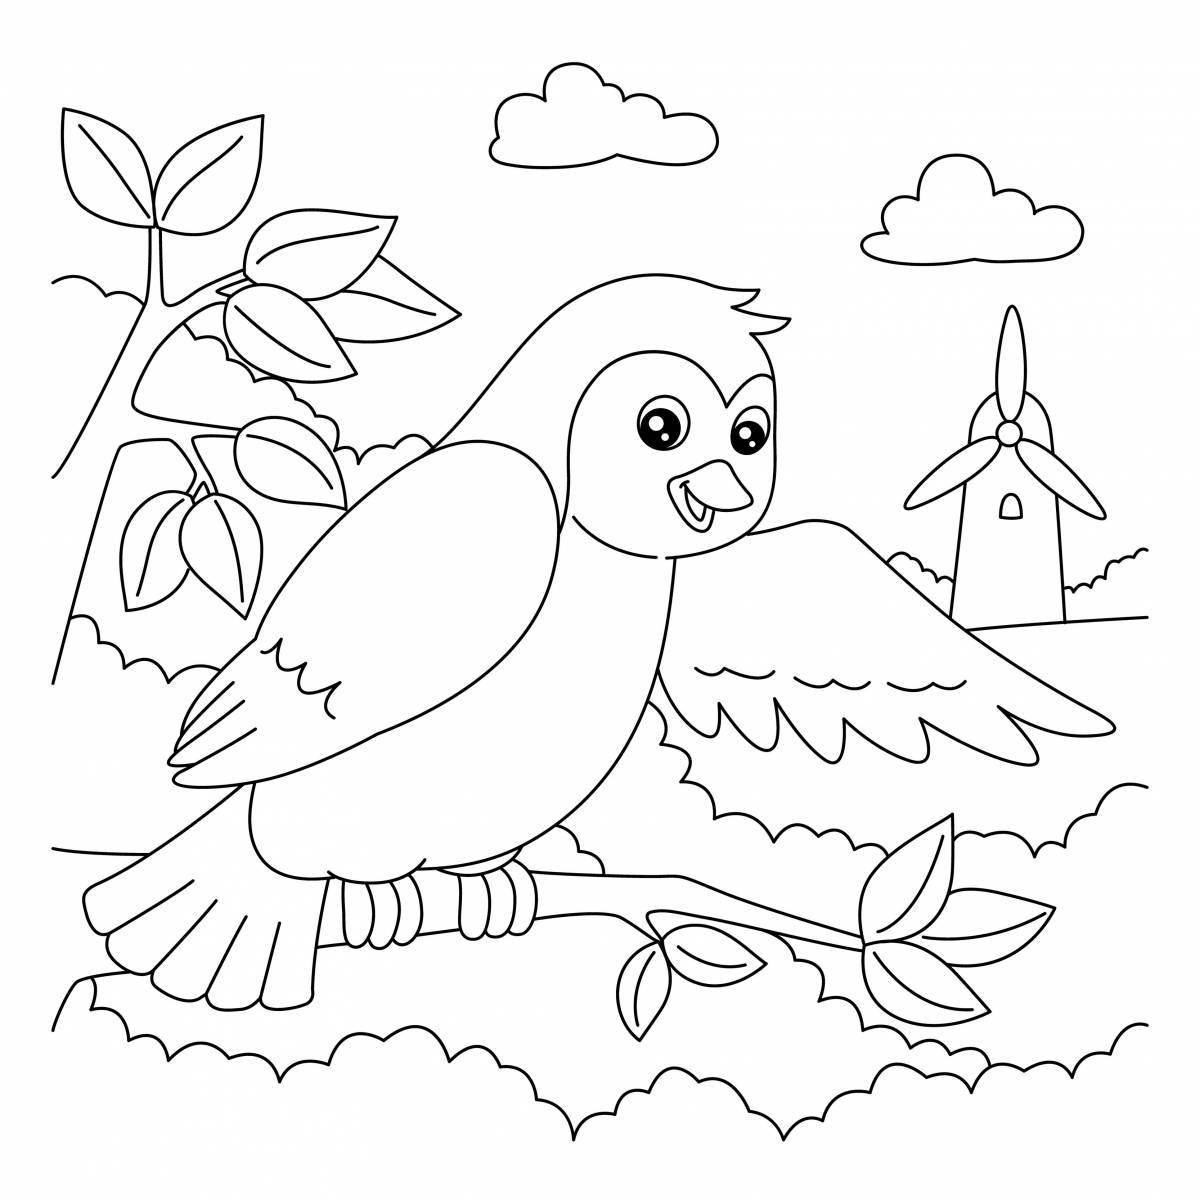 Bright bird coloring for grade 1